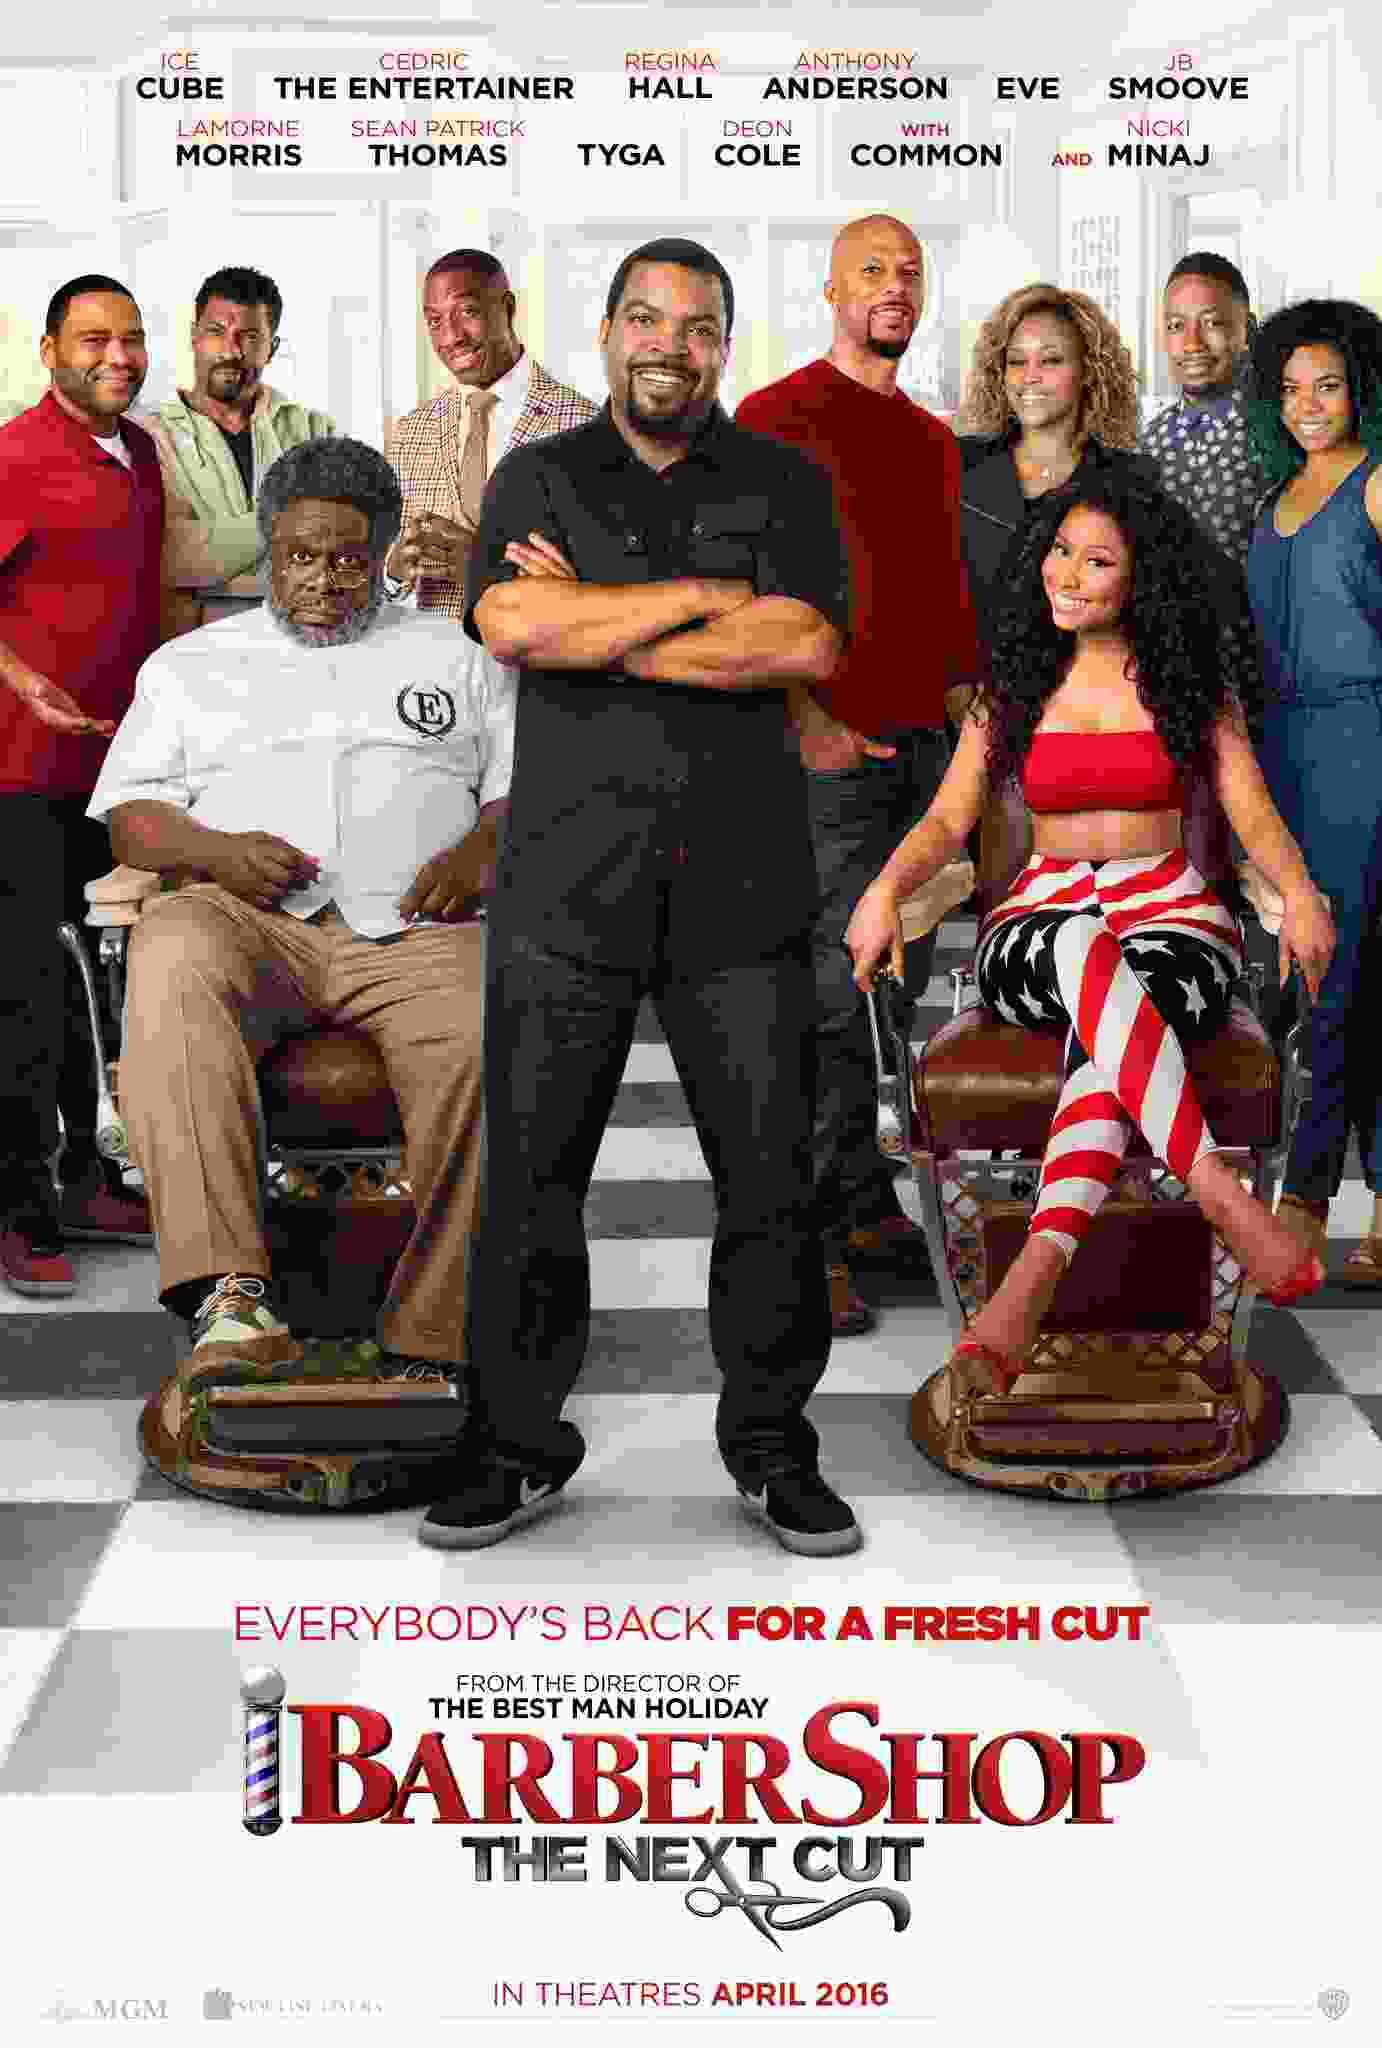 Barbershop: The Next Cut (2016) vj Junior Ice Cube